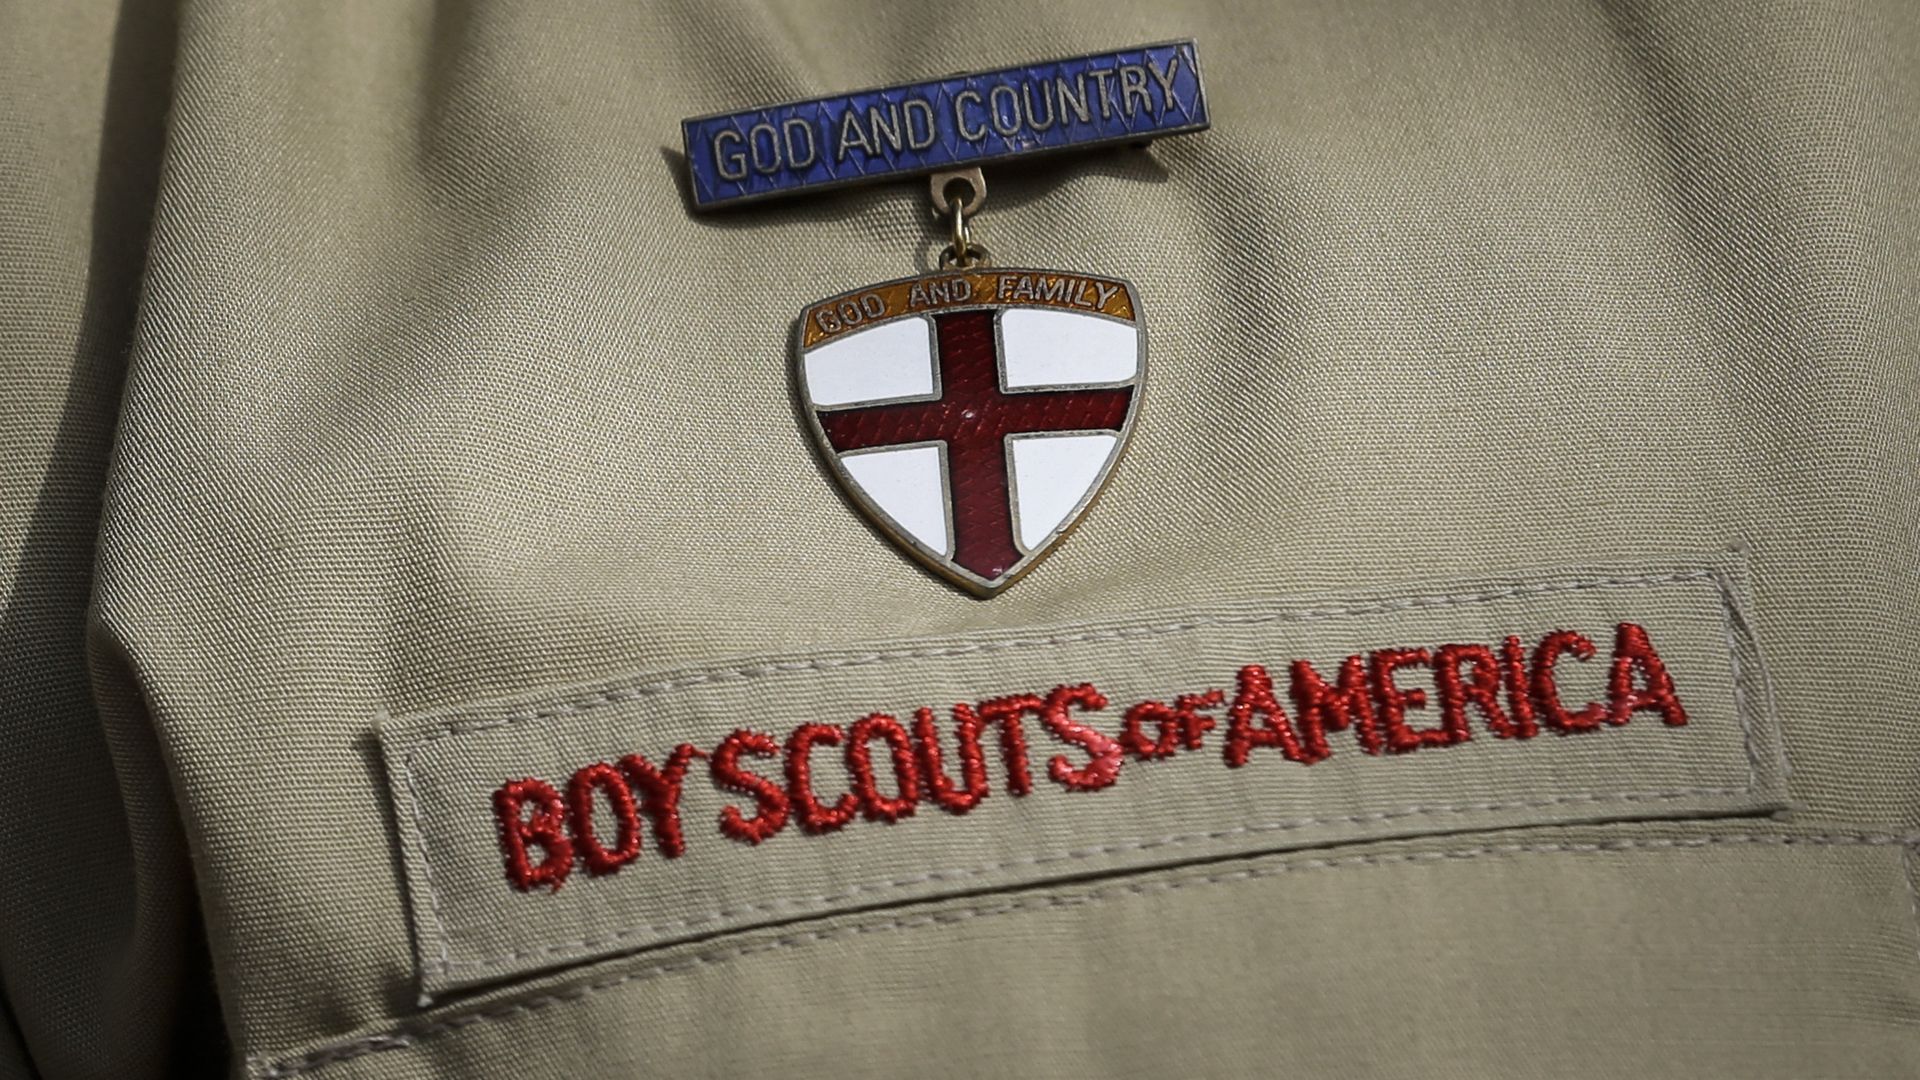 A Bpy Scouts uniform shirt